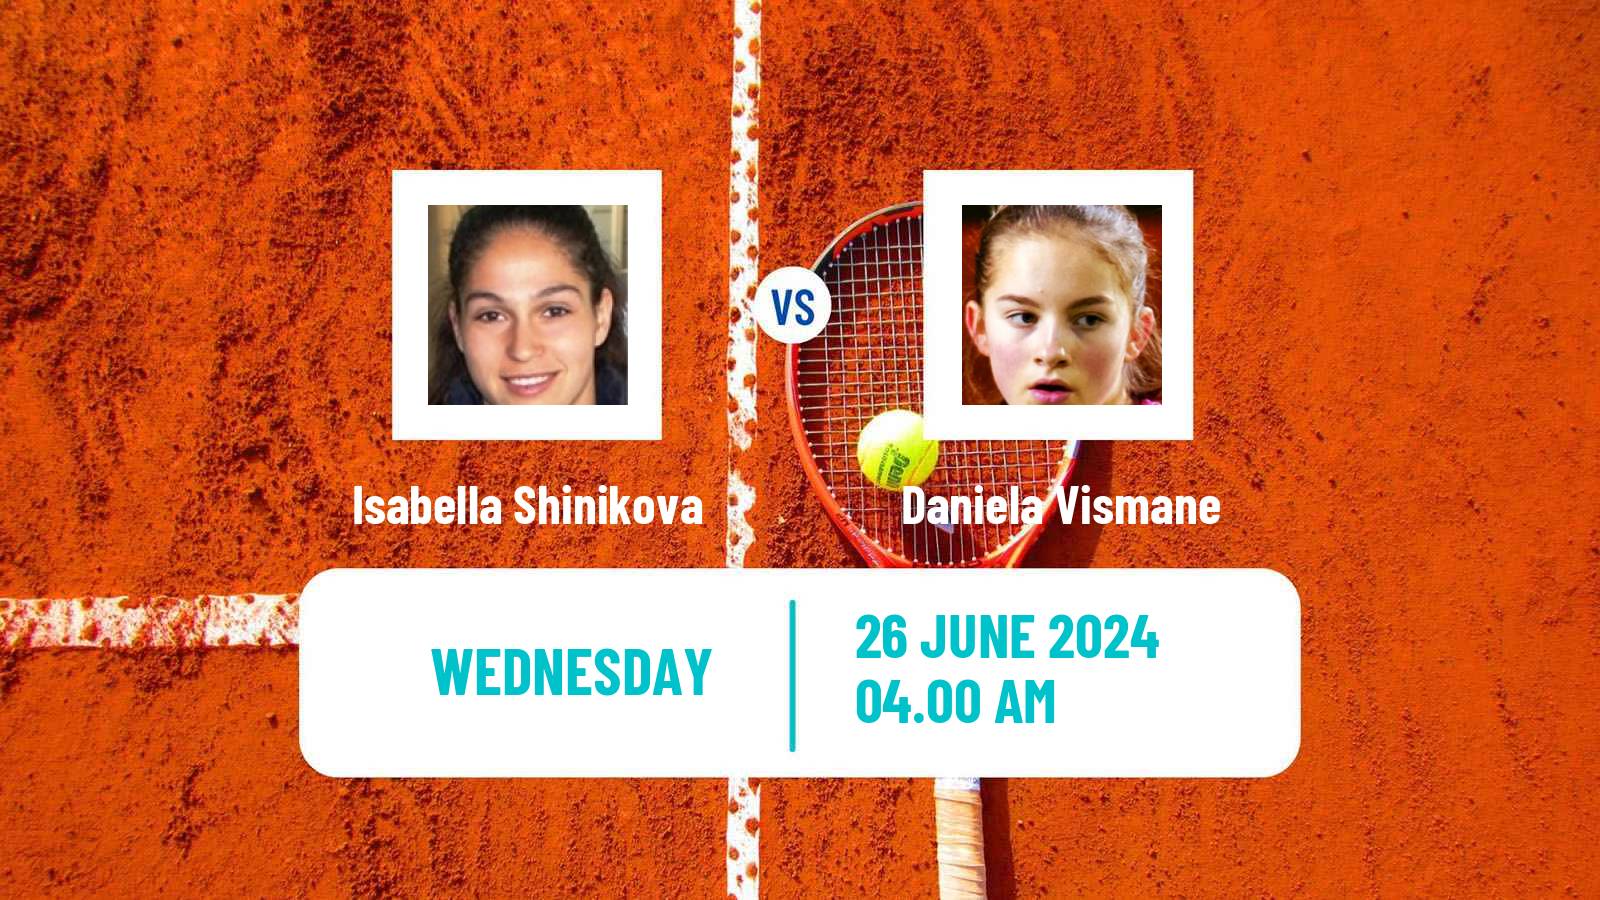 Tennis ITF W75 Doksy Stare Splavy Women Isabella Shinikova - Daniela Vismane